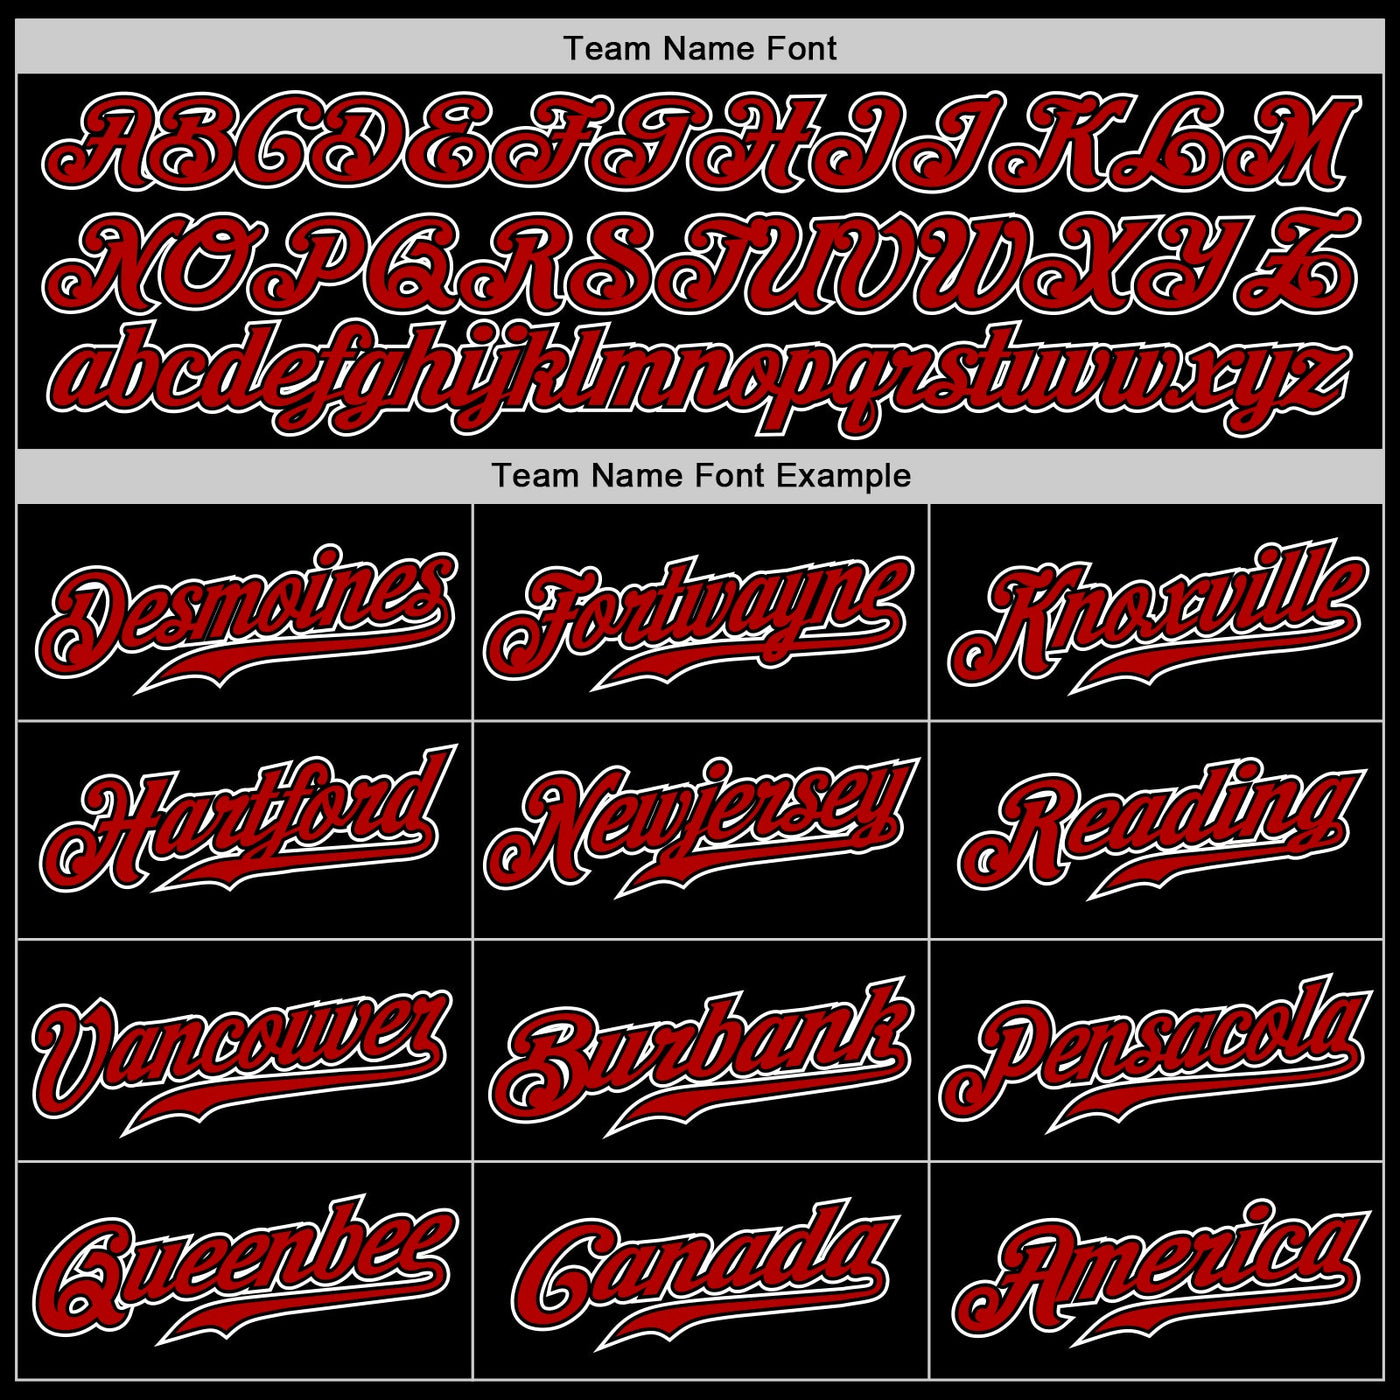 Custom Black Red-White Authentic Baseball Jersey - Owls Matrix LTD